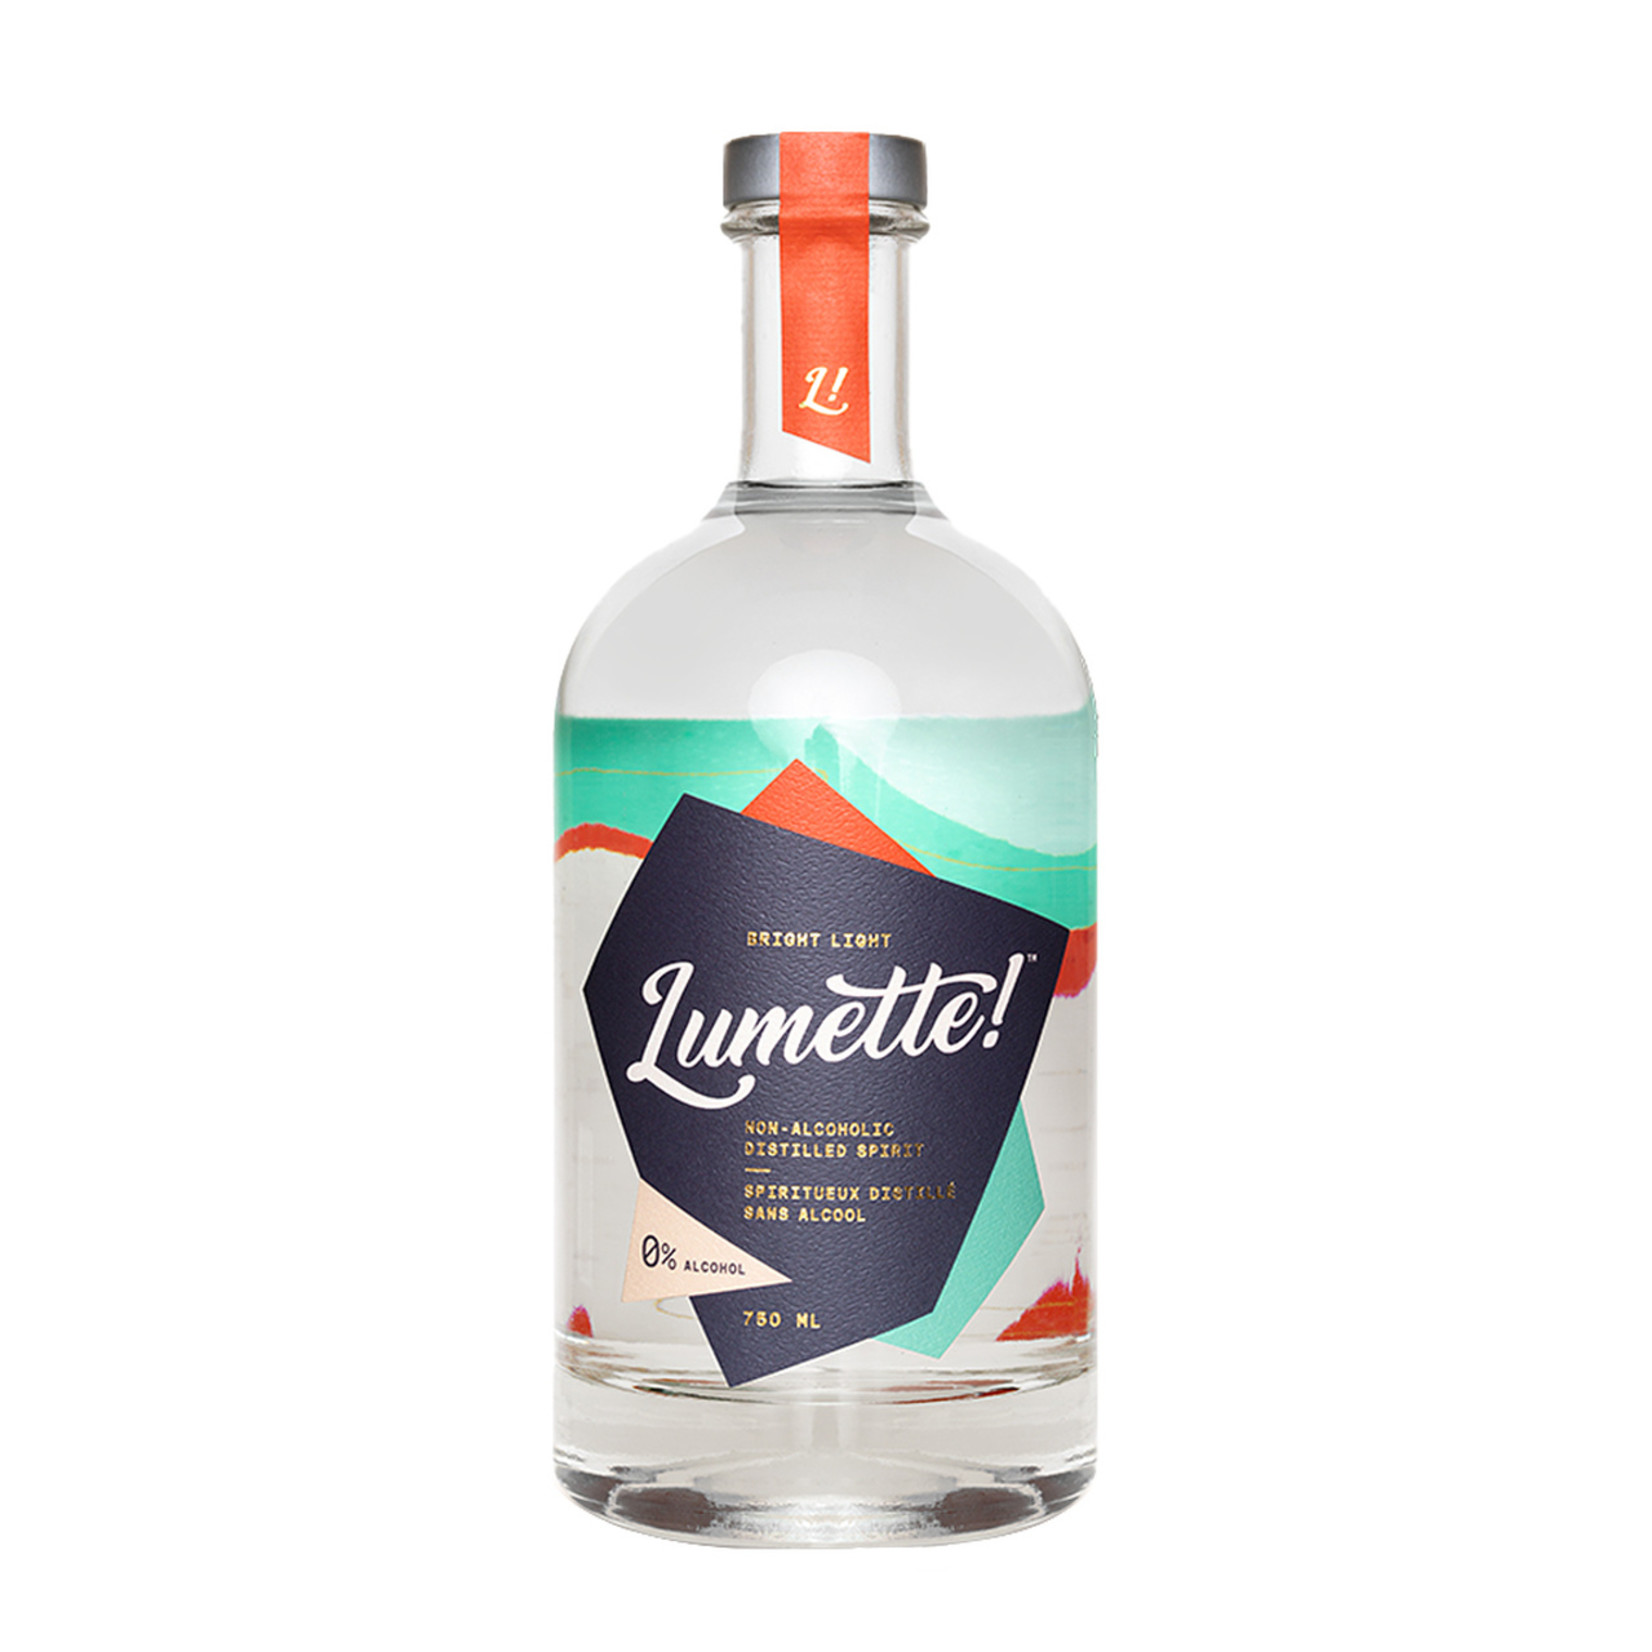 Lumette Lumette! Bright Light 375ml